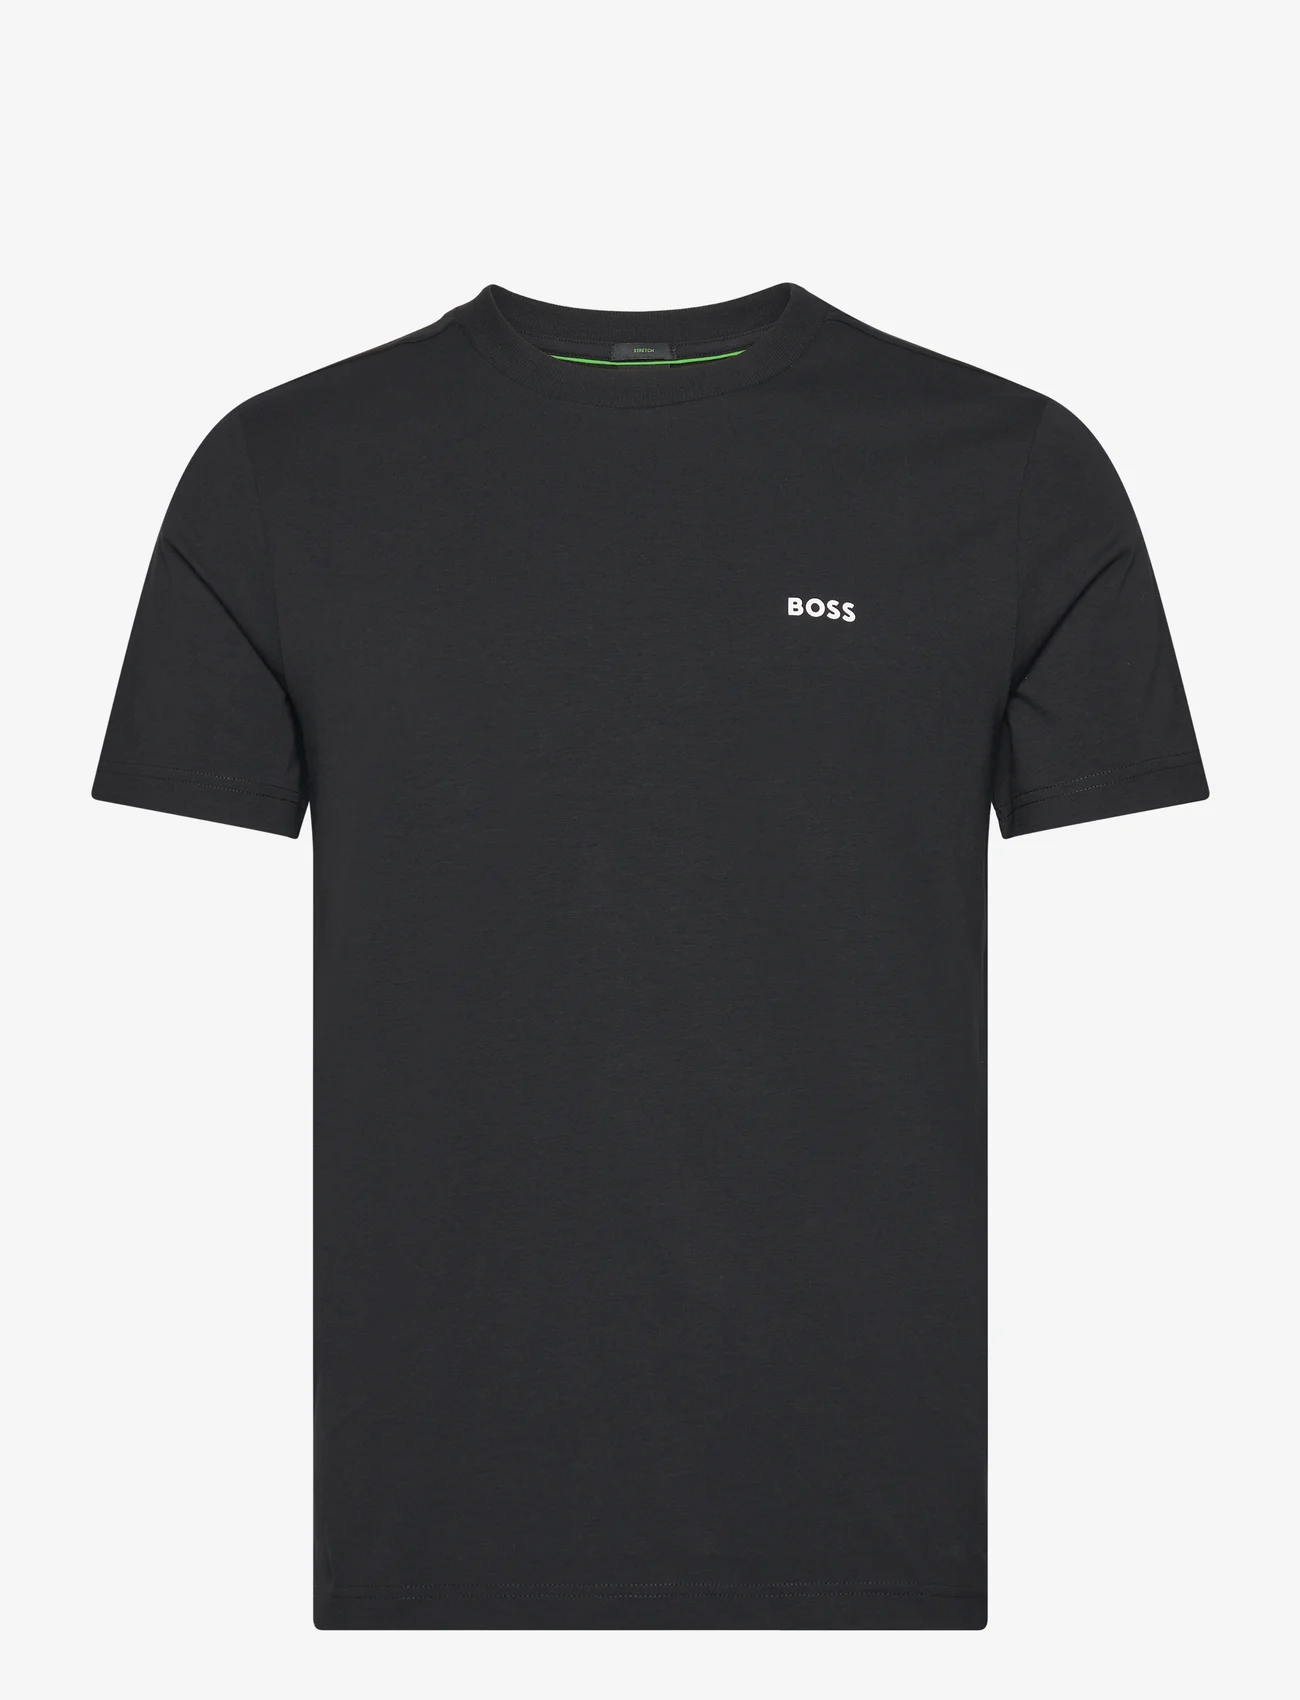 BOSS - Tee - t-shirts - black - 0